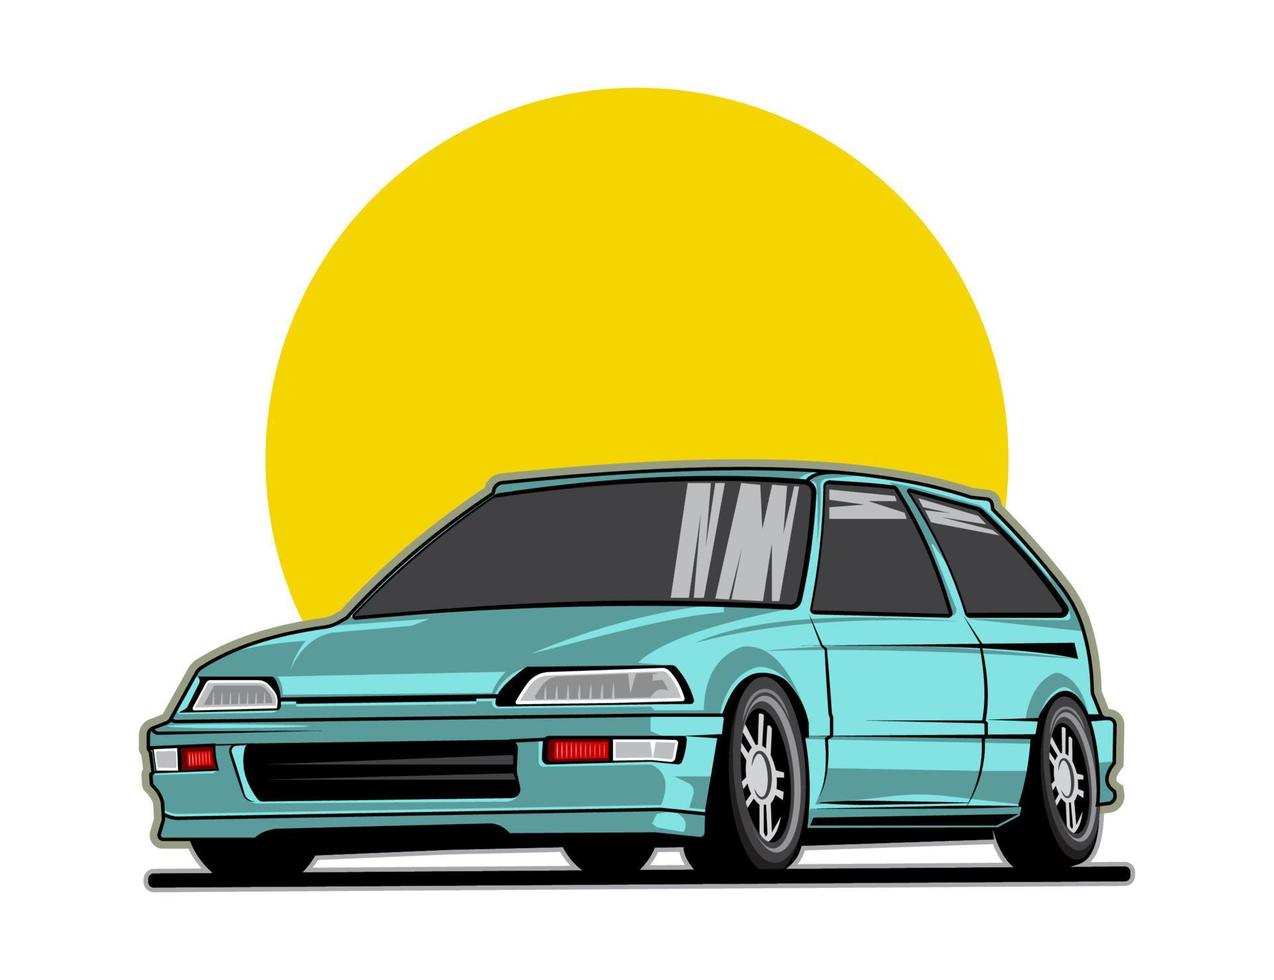 japan car design in blue tone color for automobile illustration graphic vector